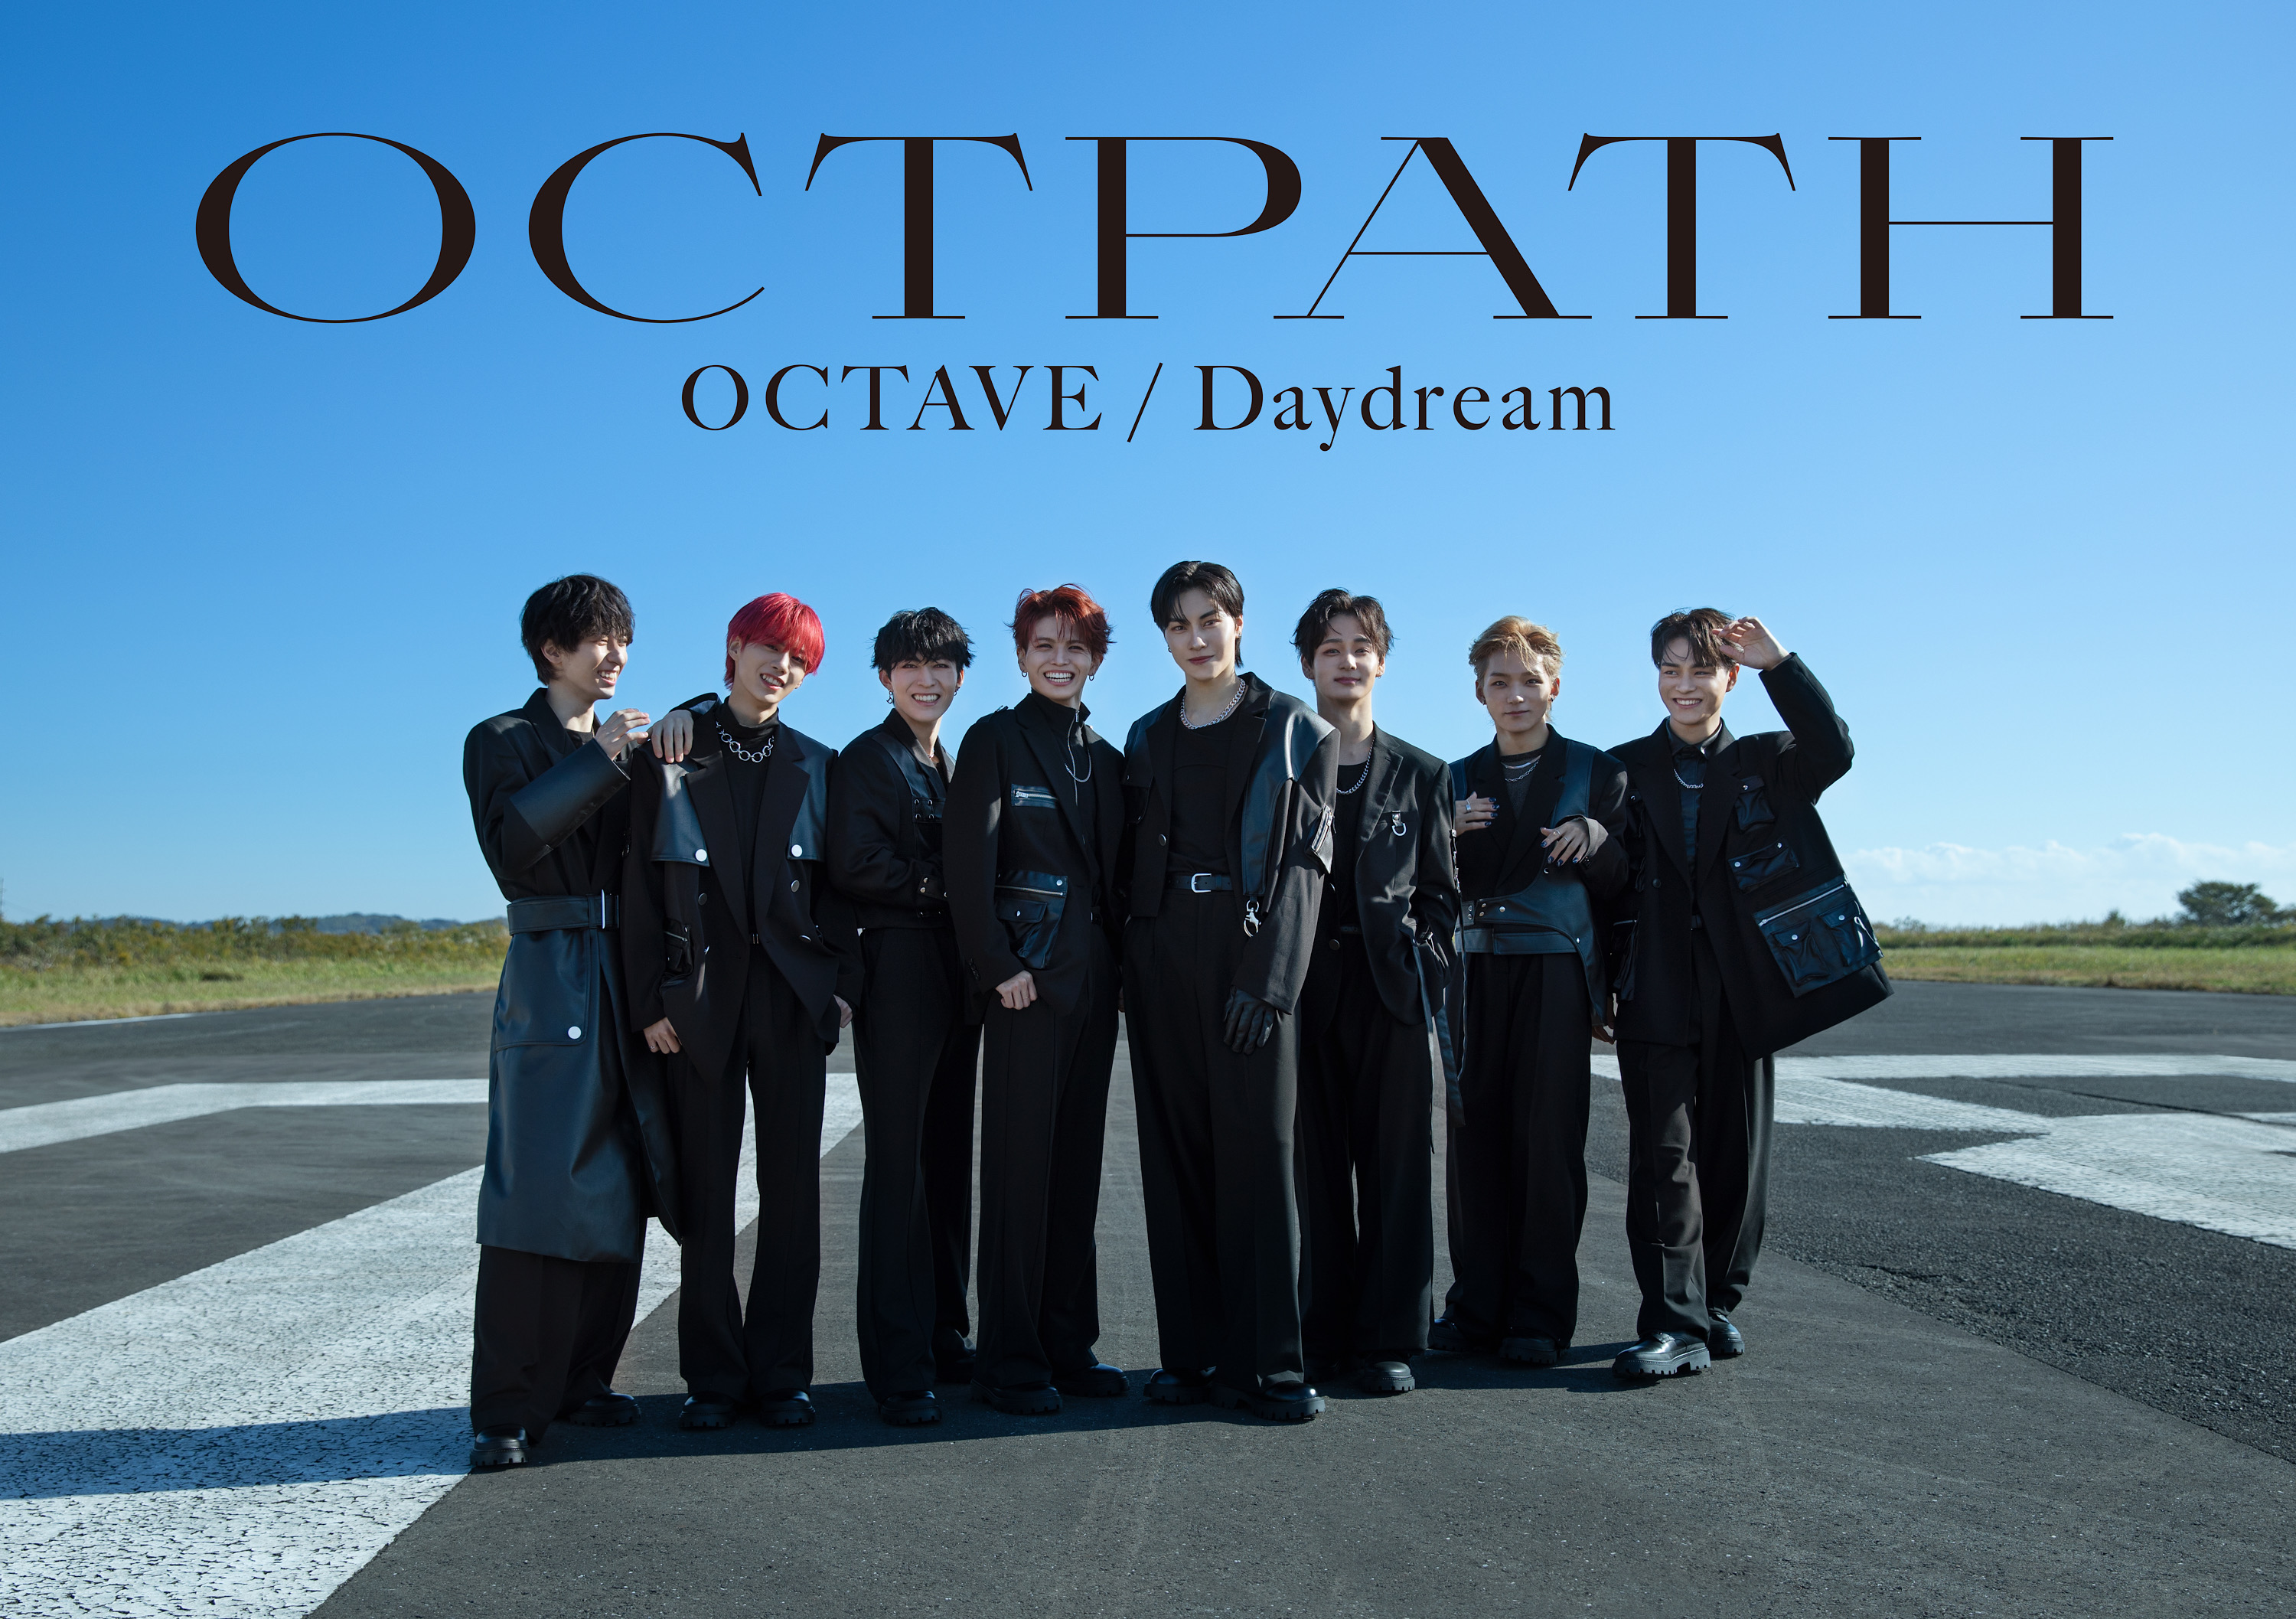 OCTAVE / Daydream